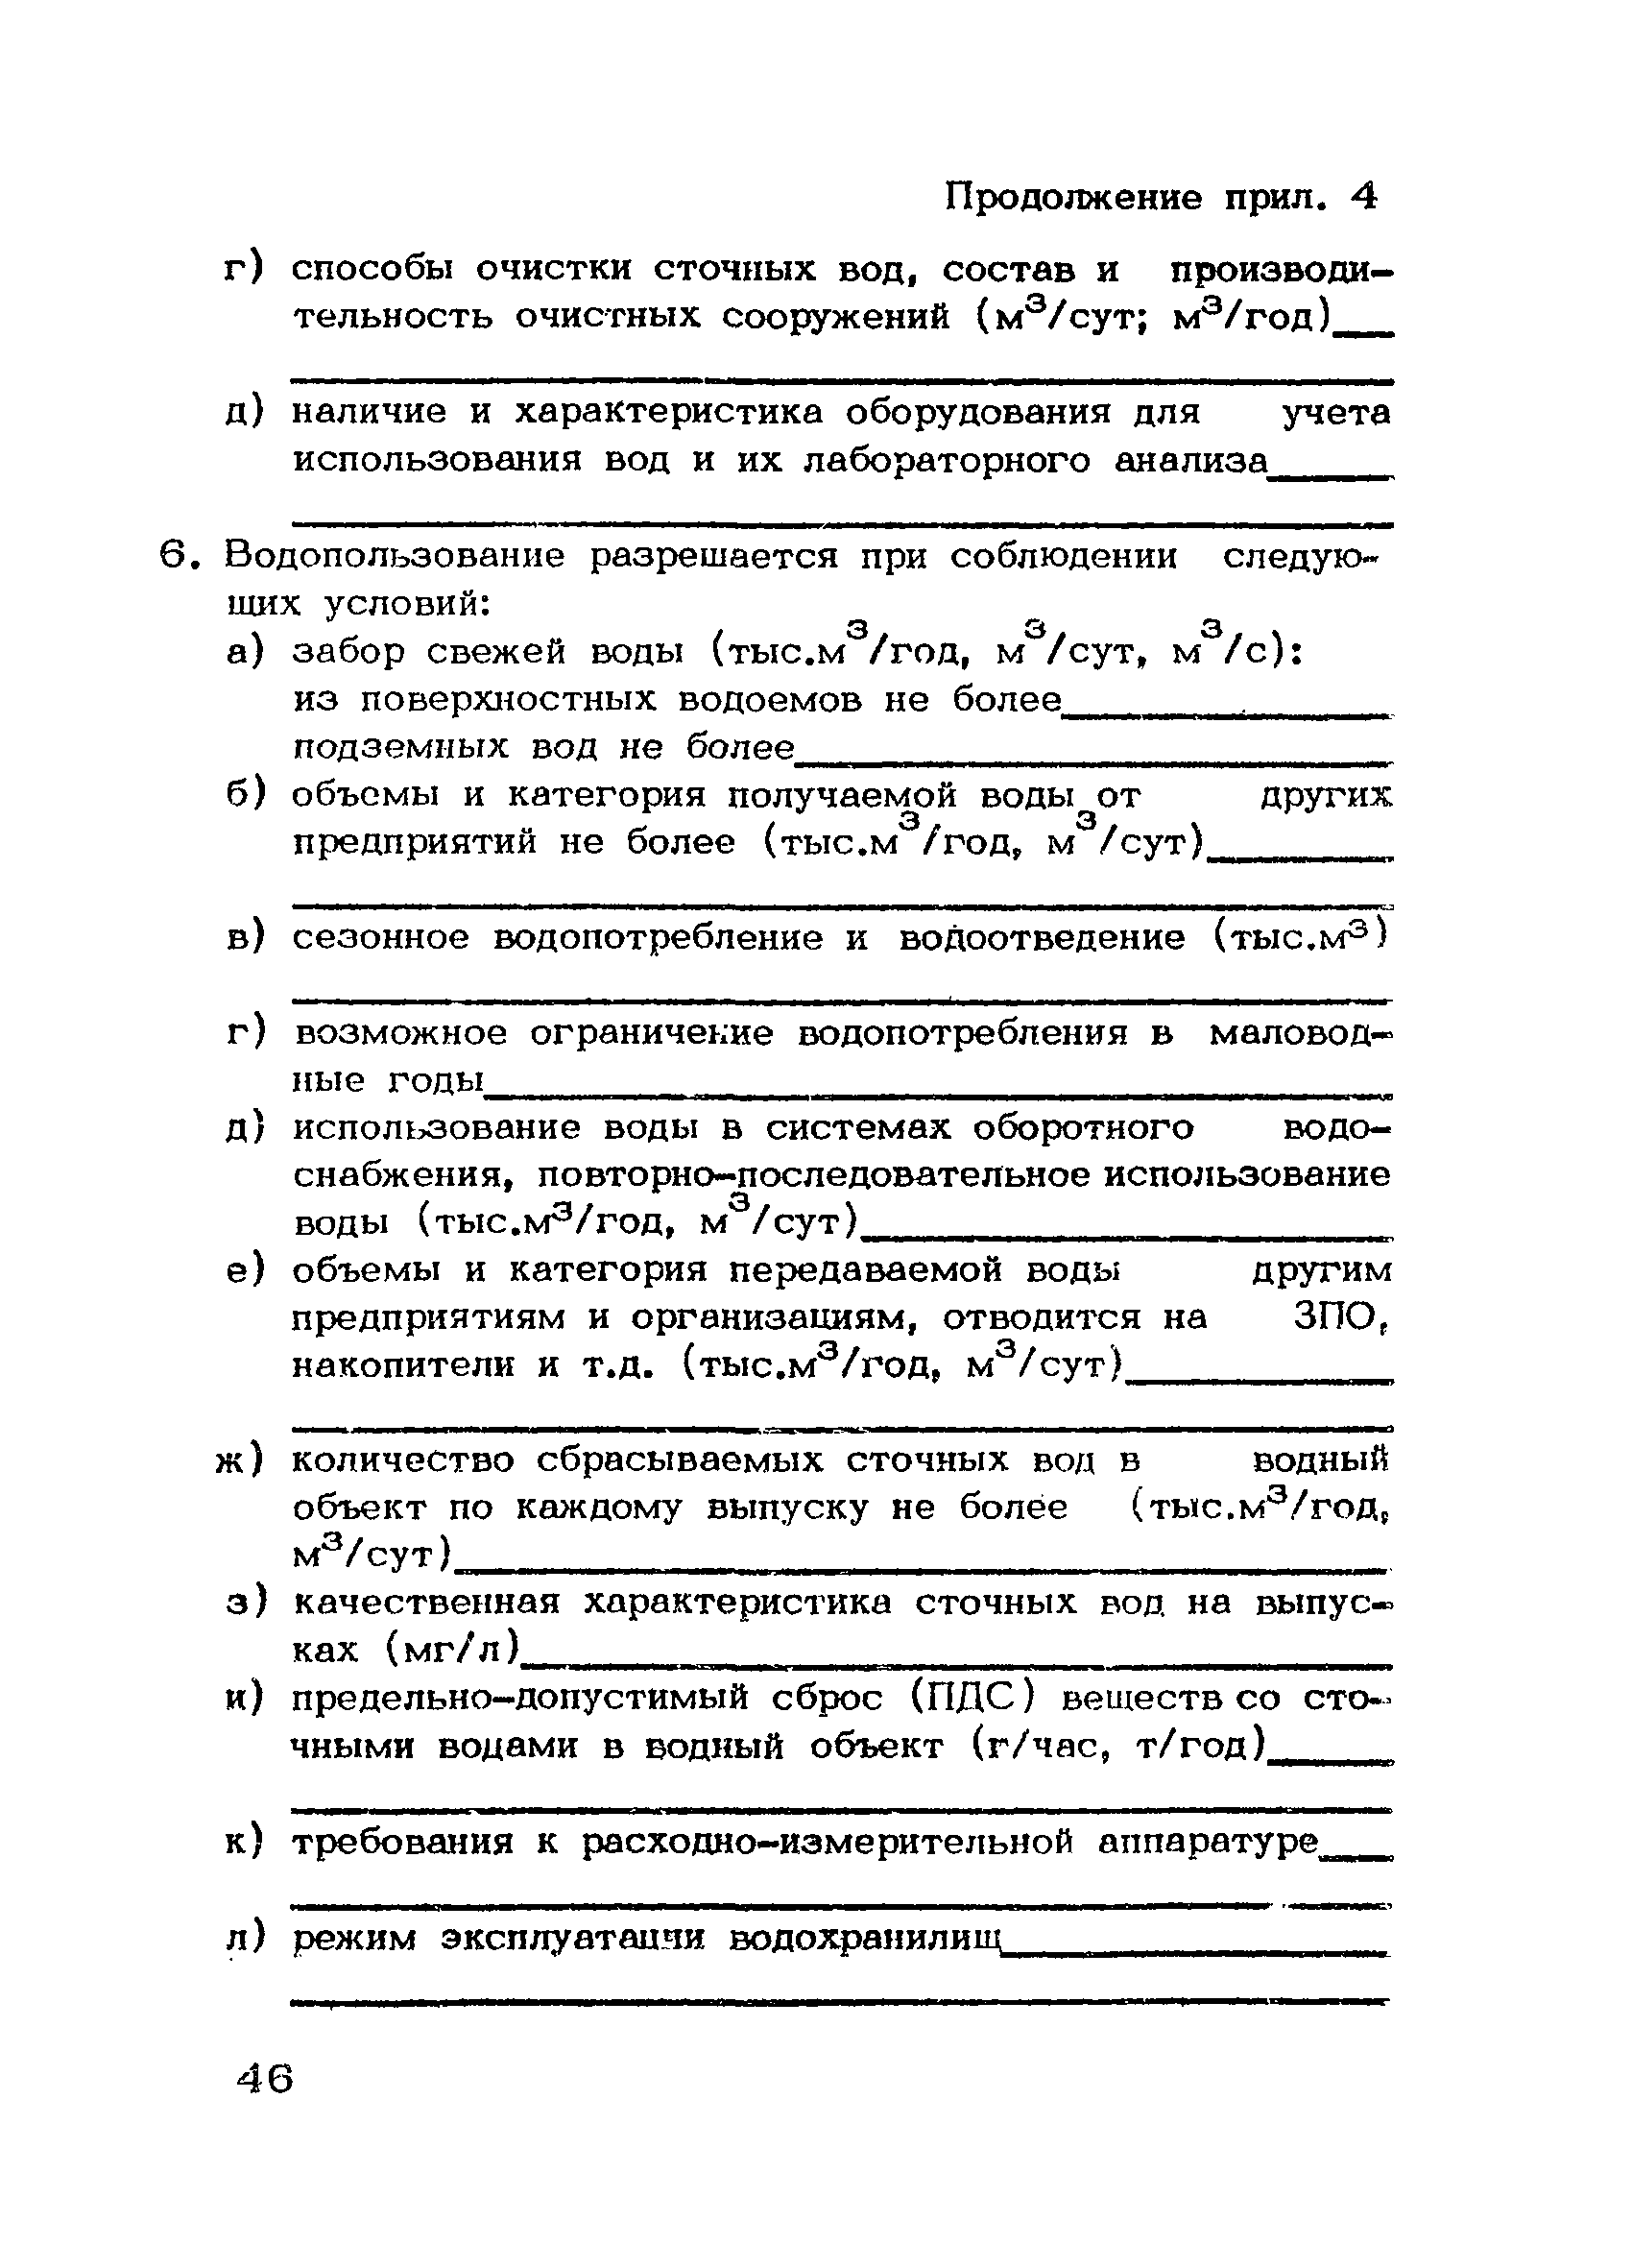 НВН 33-5.1.02-83